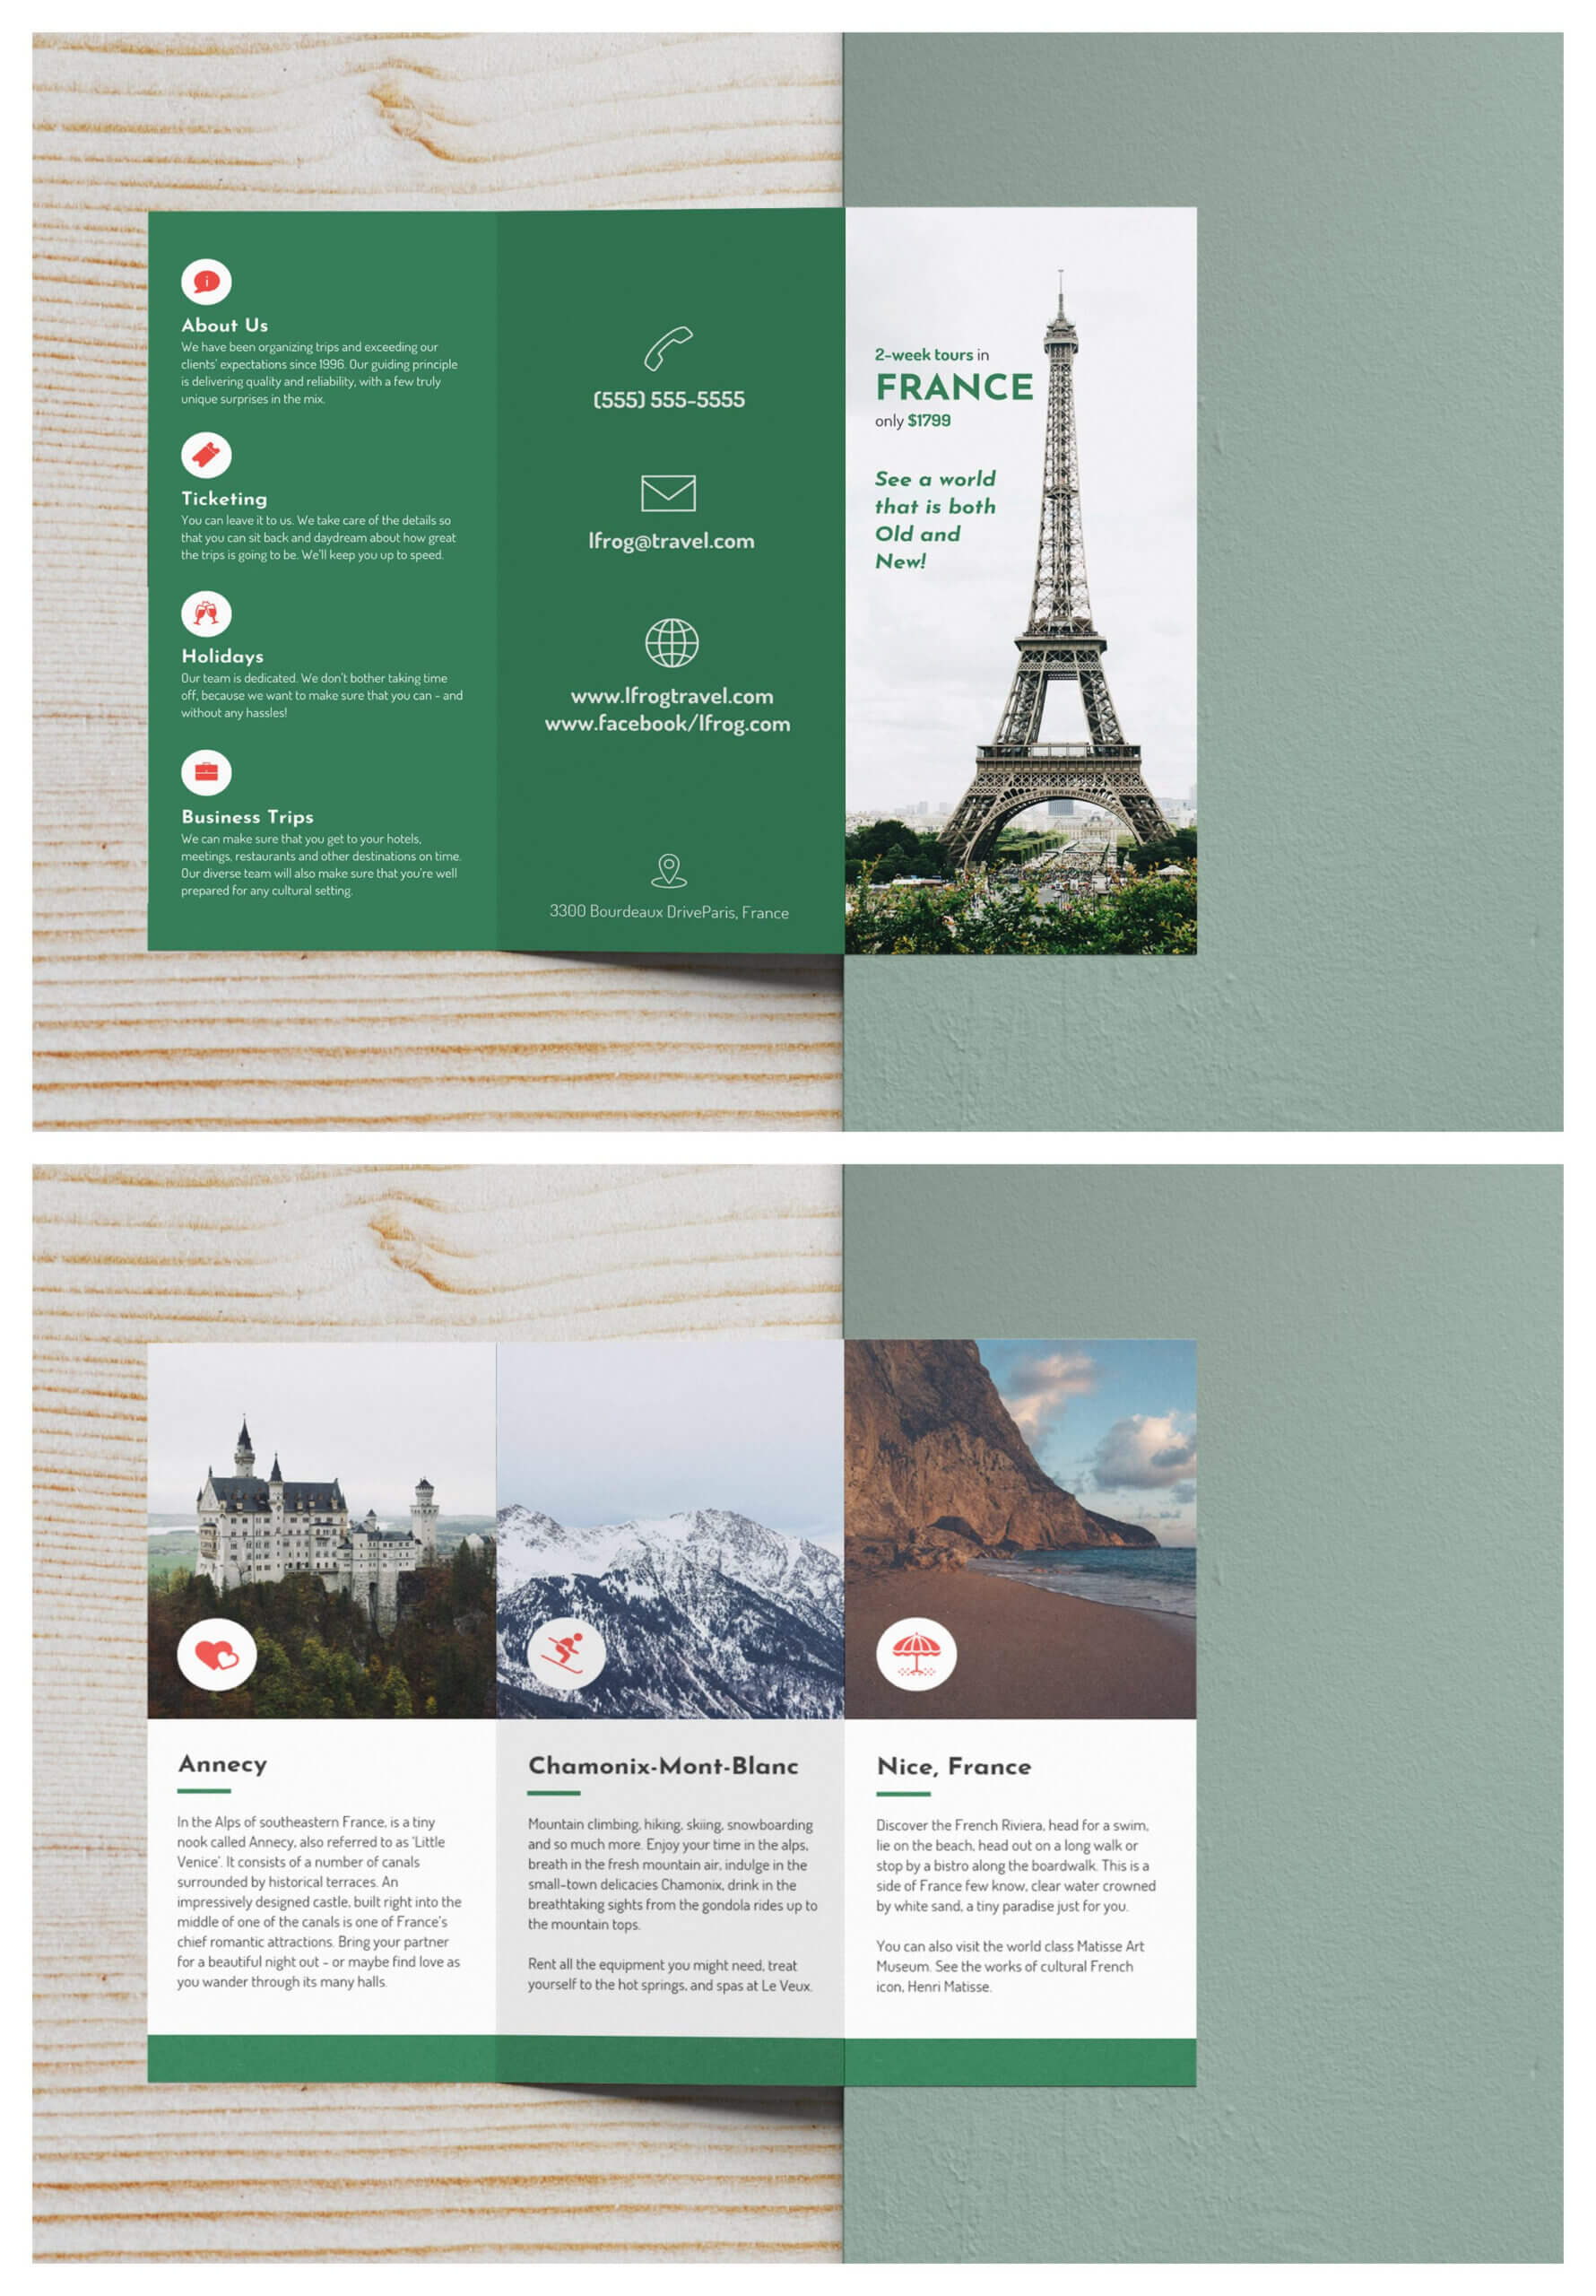 sample-travel-brochure-dalep-midnightpig-co-regarding-travel-brochure-template-for-students